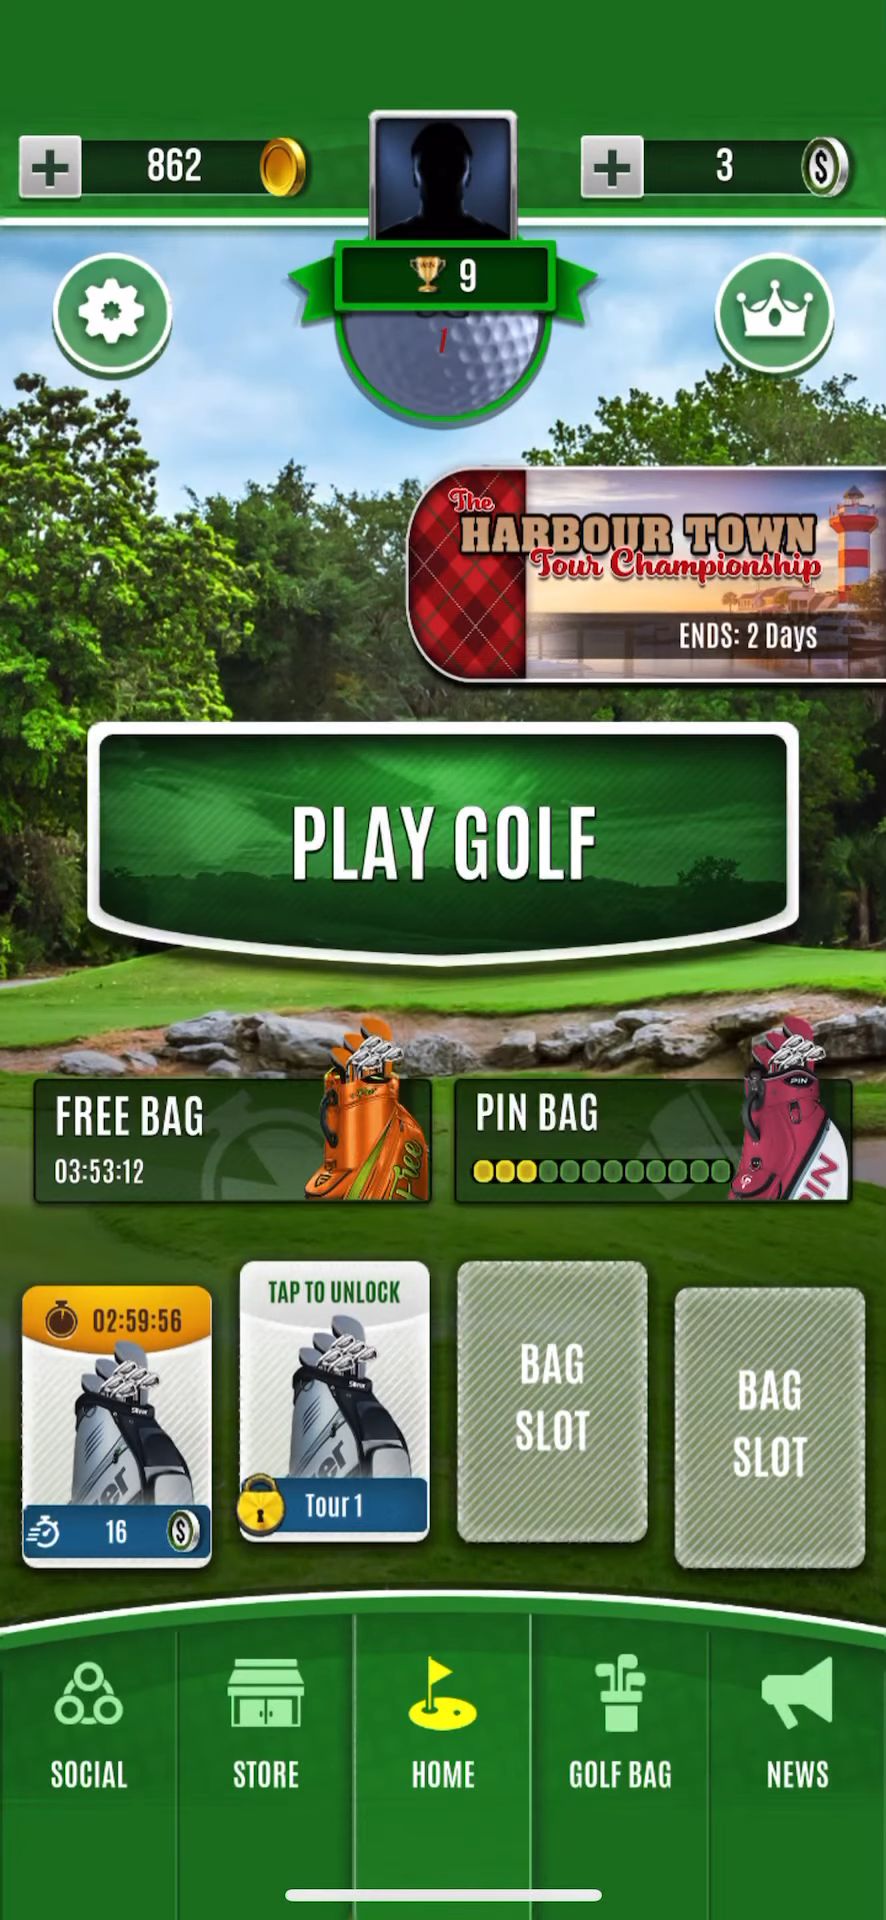 Ultimate Golf! скриншот 1